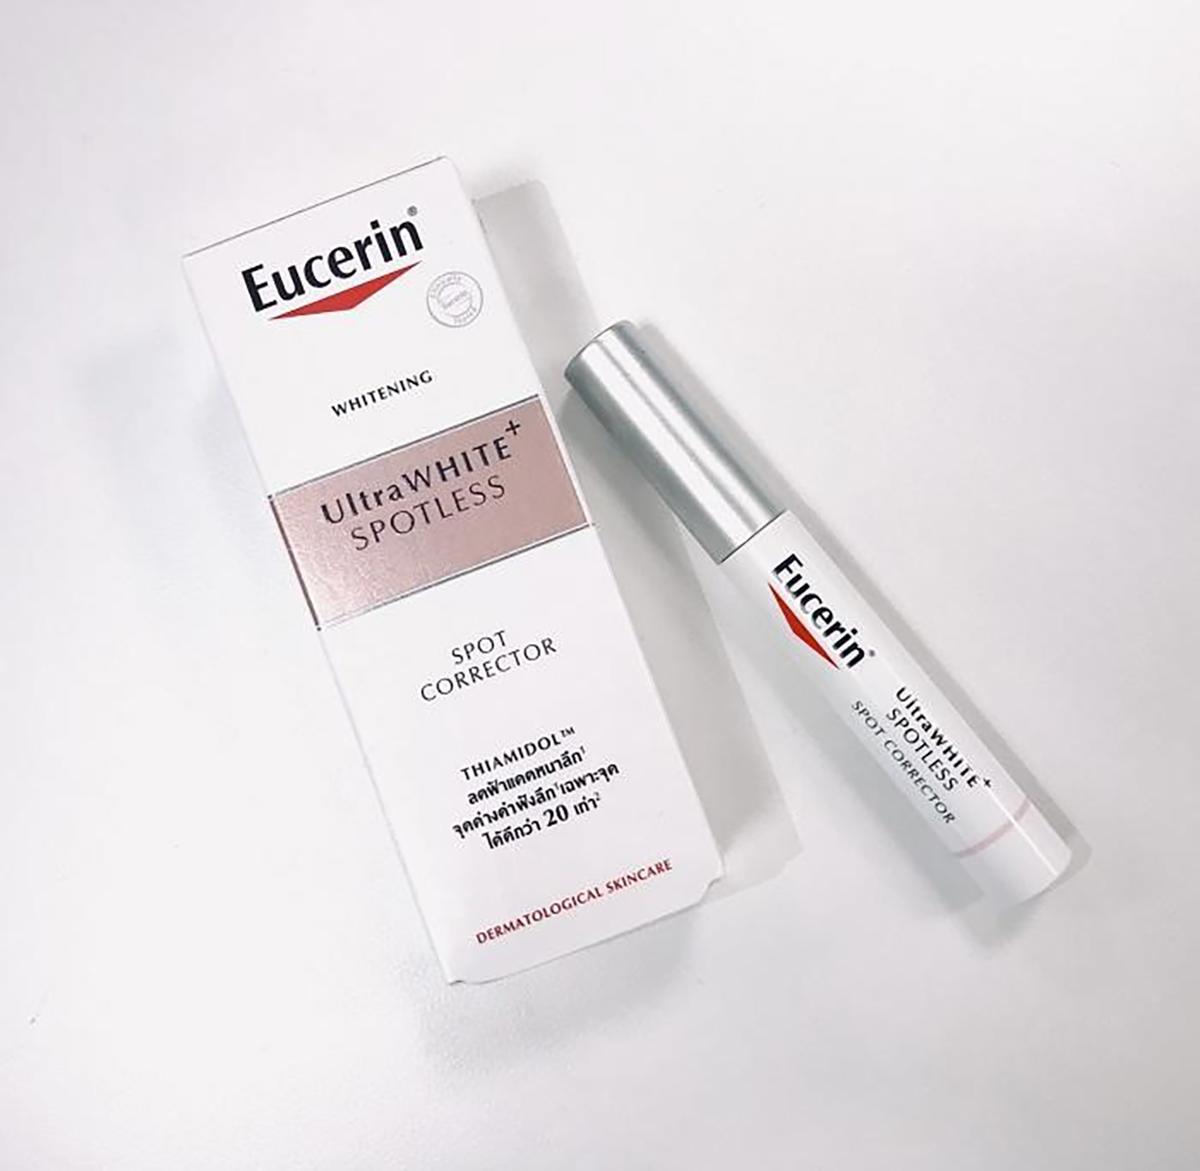 Tinh chất dưỡng trắng Eucerin Ultra White Spot Corrector